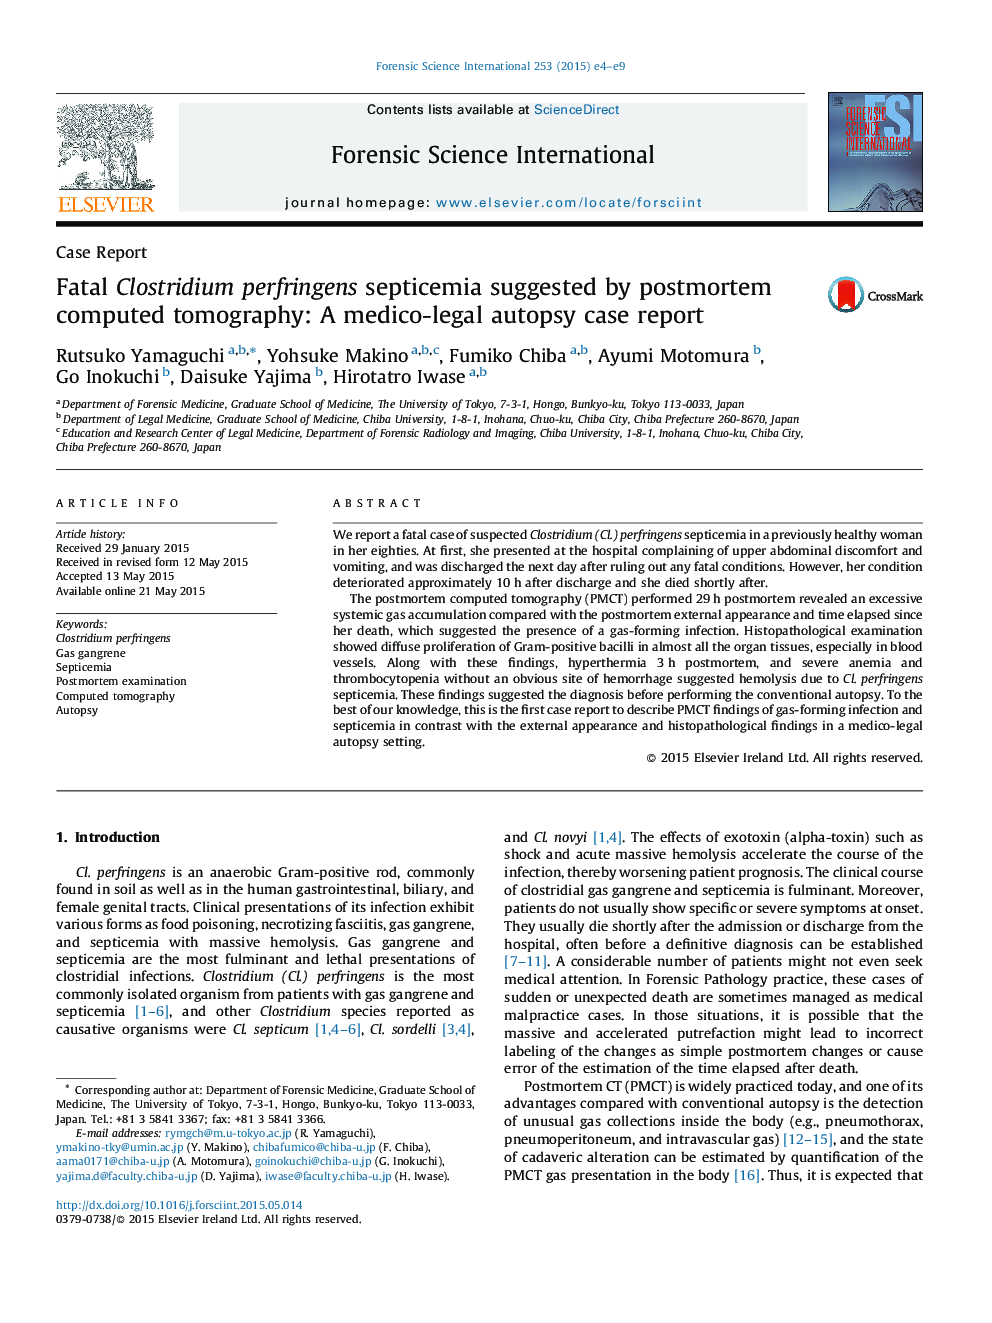 Clostridium perfringens سپتیکمی مرگبار پیشنهاد شده توسط توموگرافی کامپیوتری پس از مرگ: یک گزارش پزشکی مربوط به کالبدشکافی پزشکی قانونی